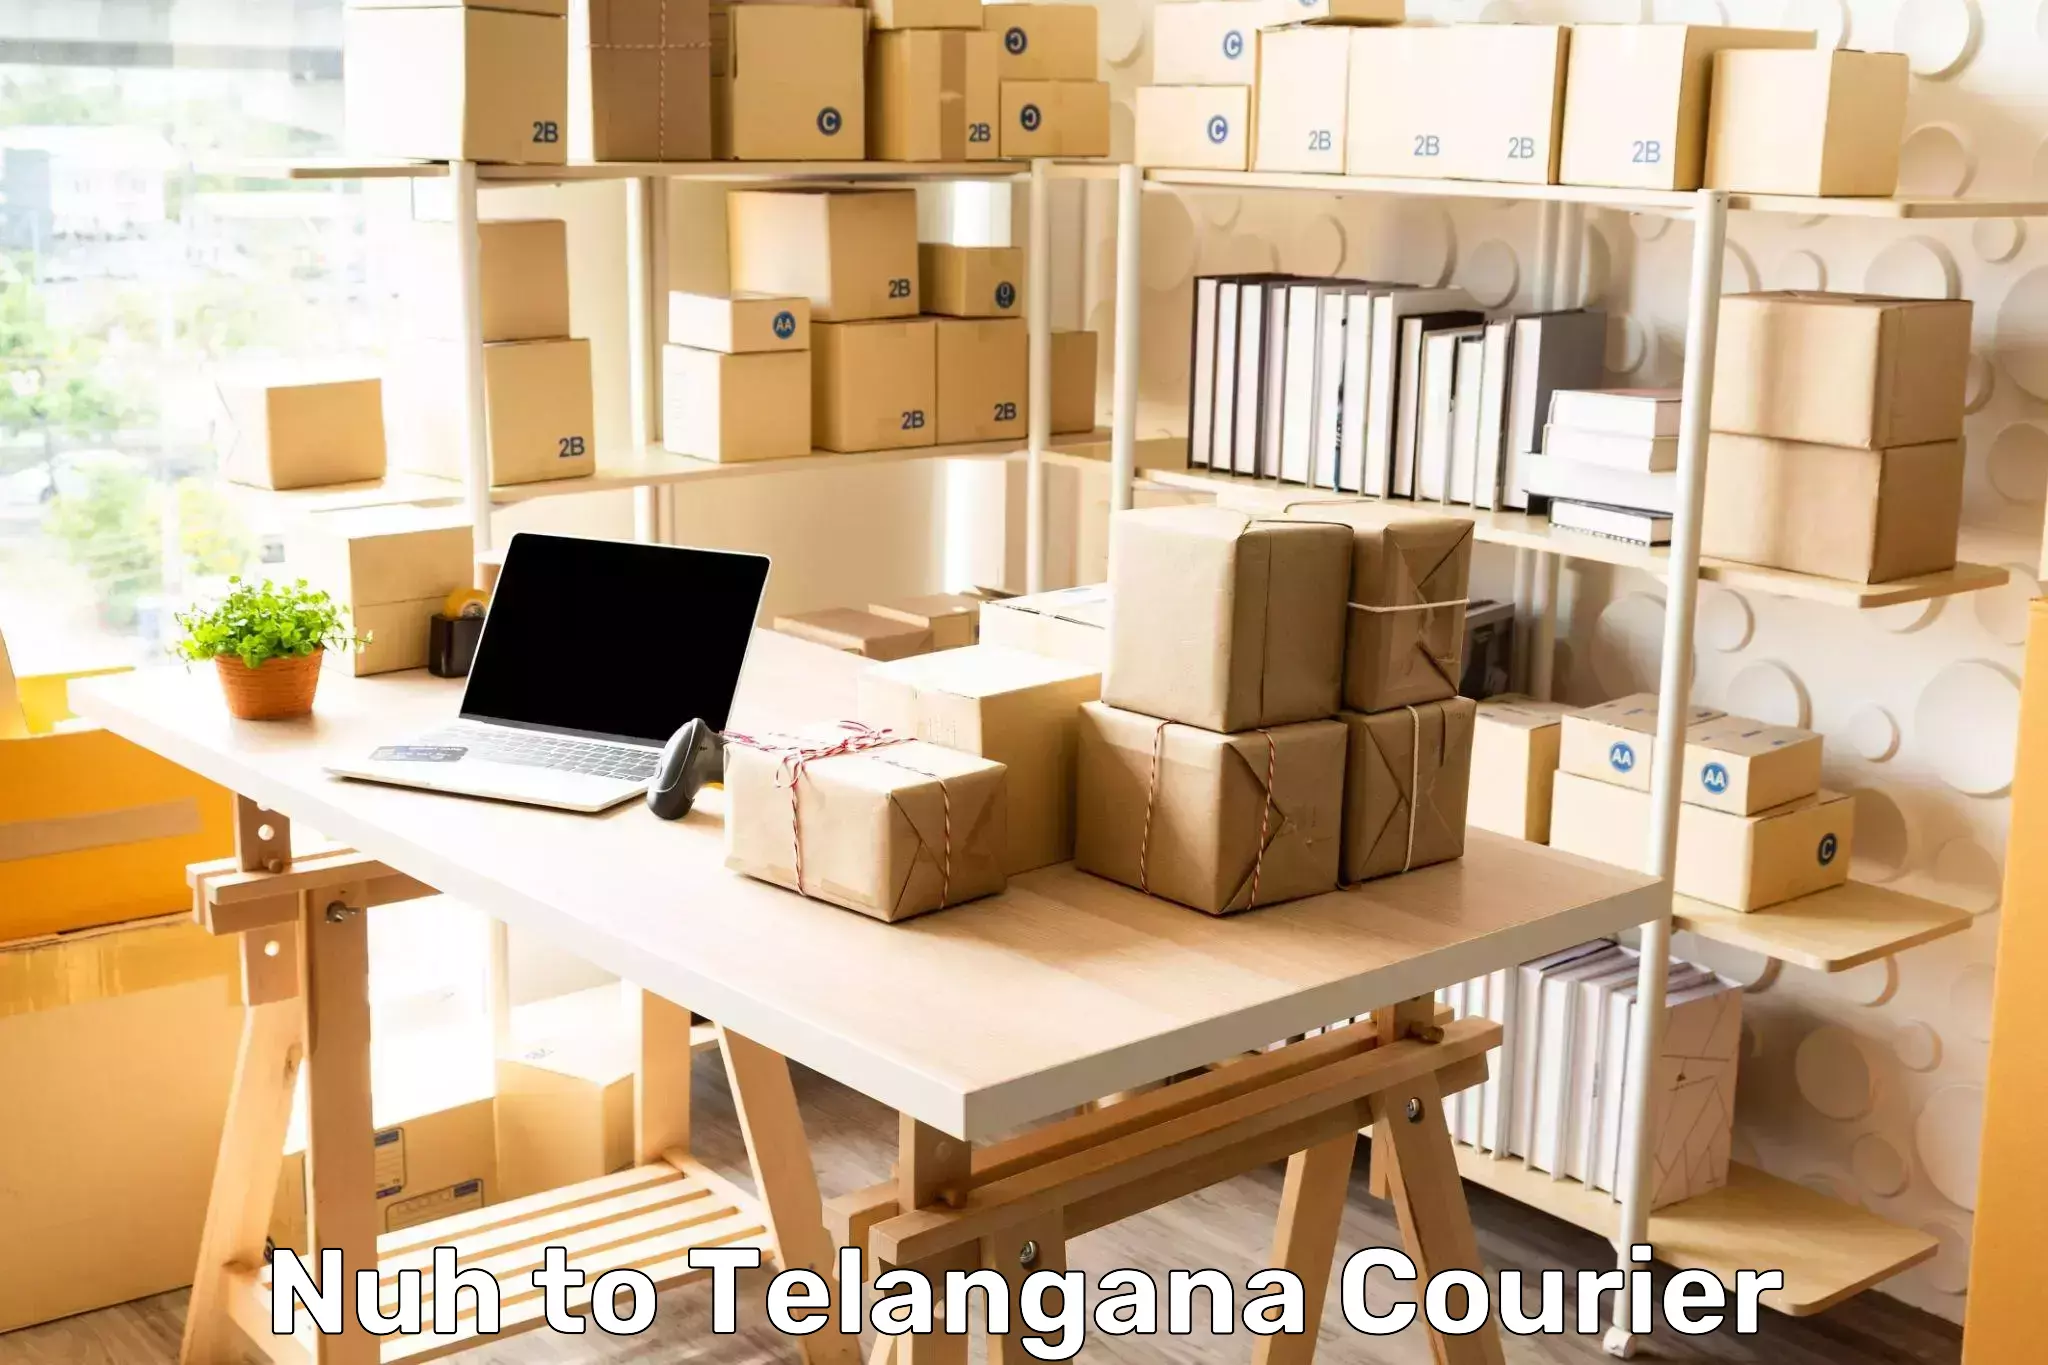 Urgent courier needs Nuh to Telangana